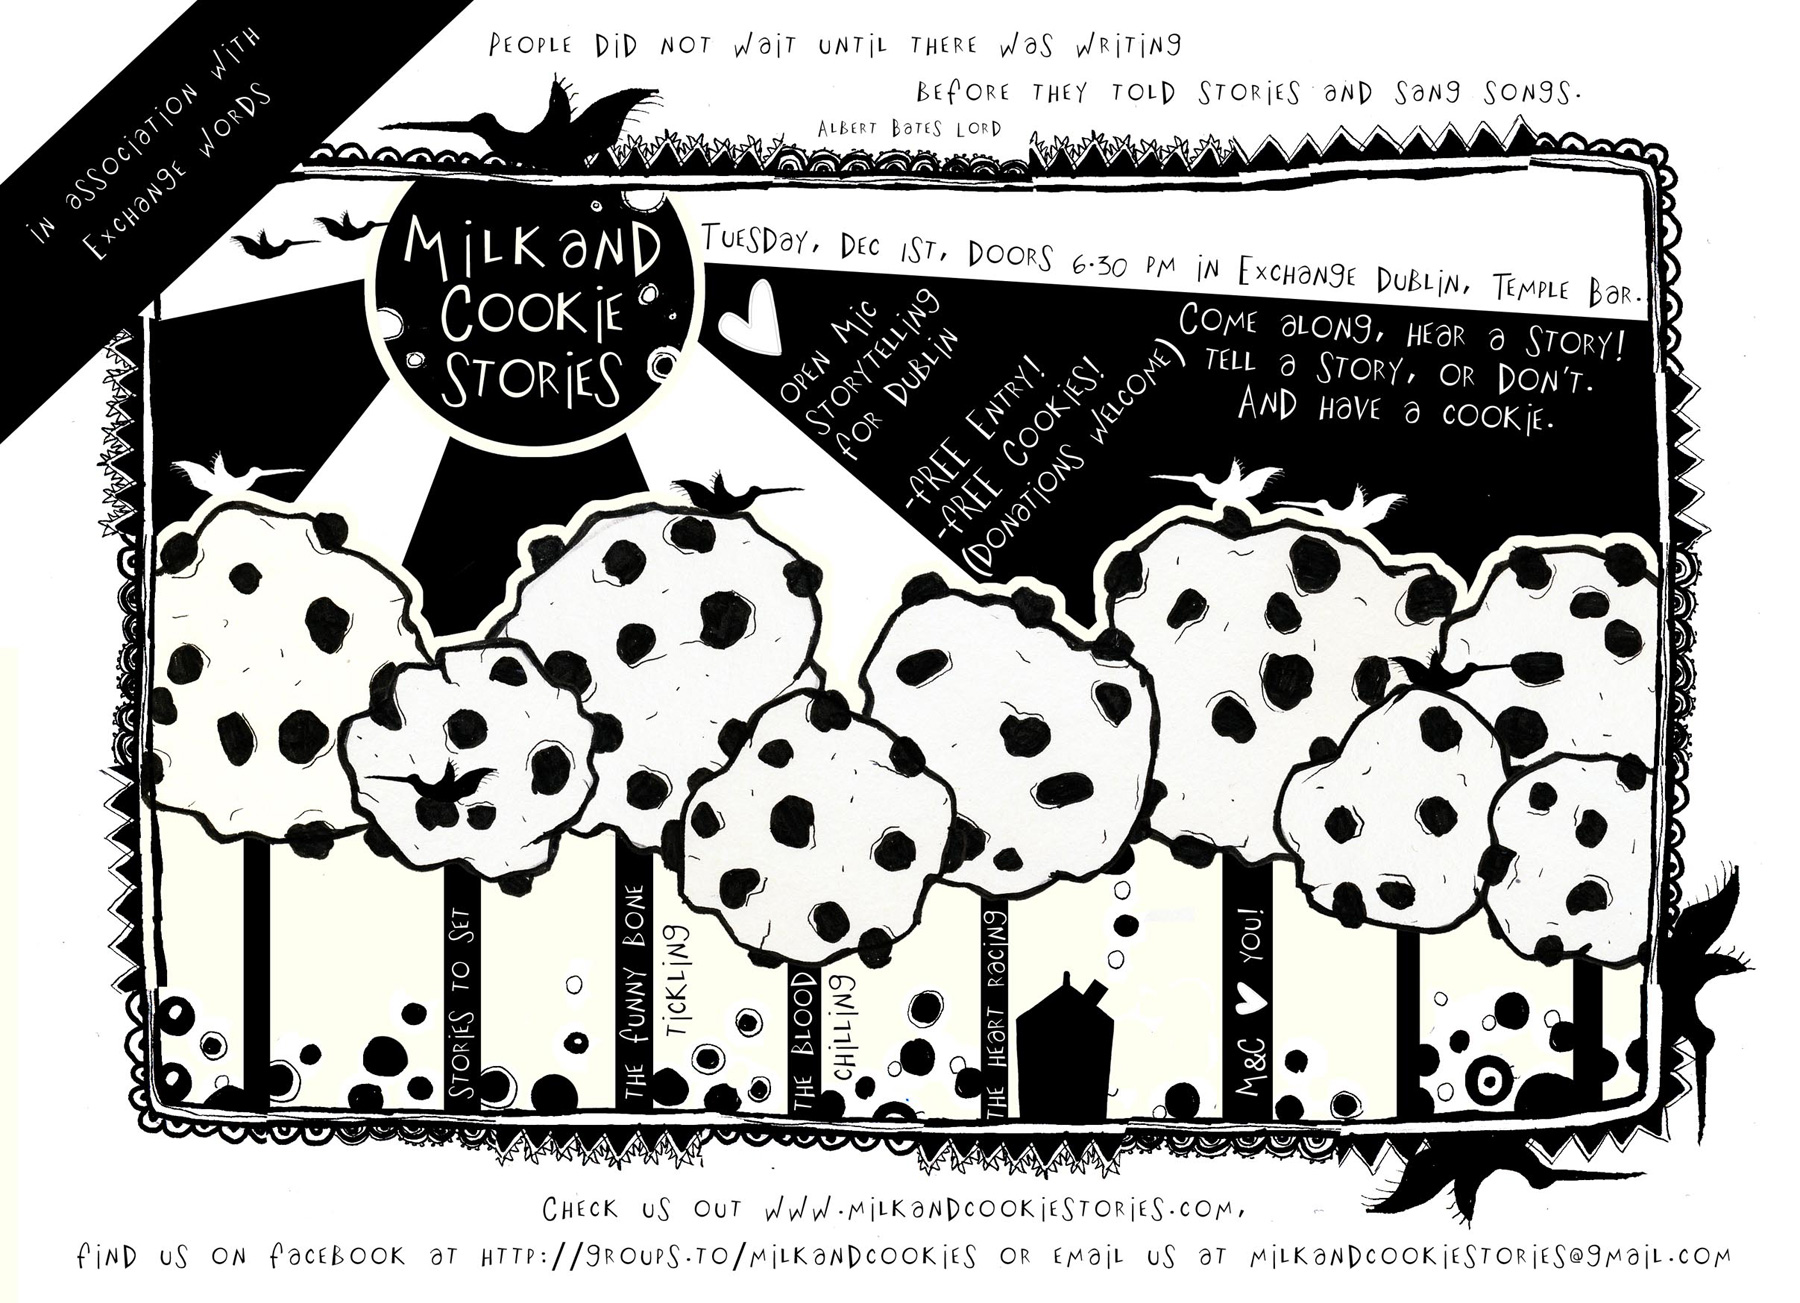 Milk and Cookie Stories flyer, mock-up